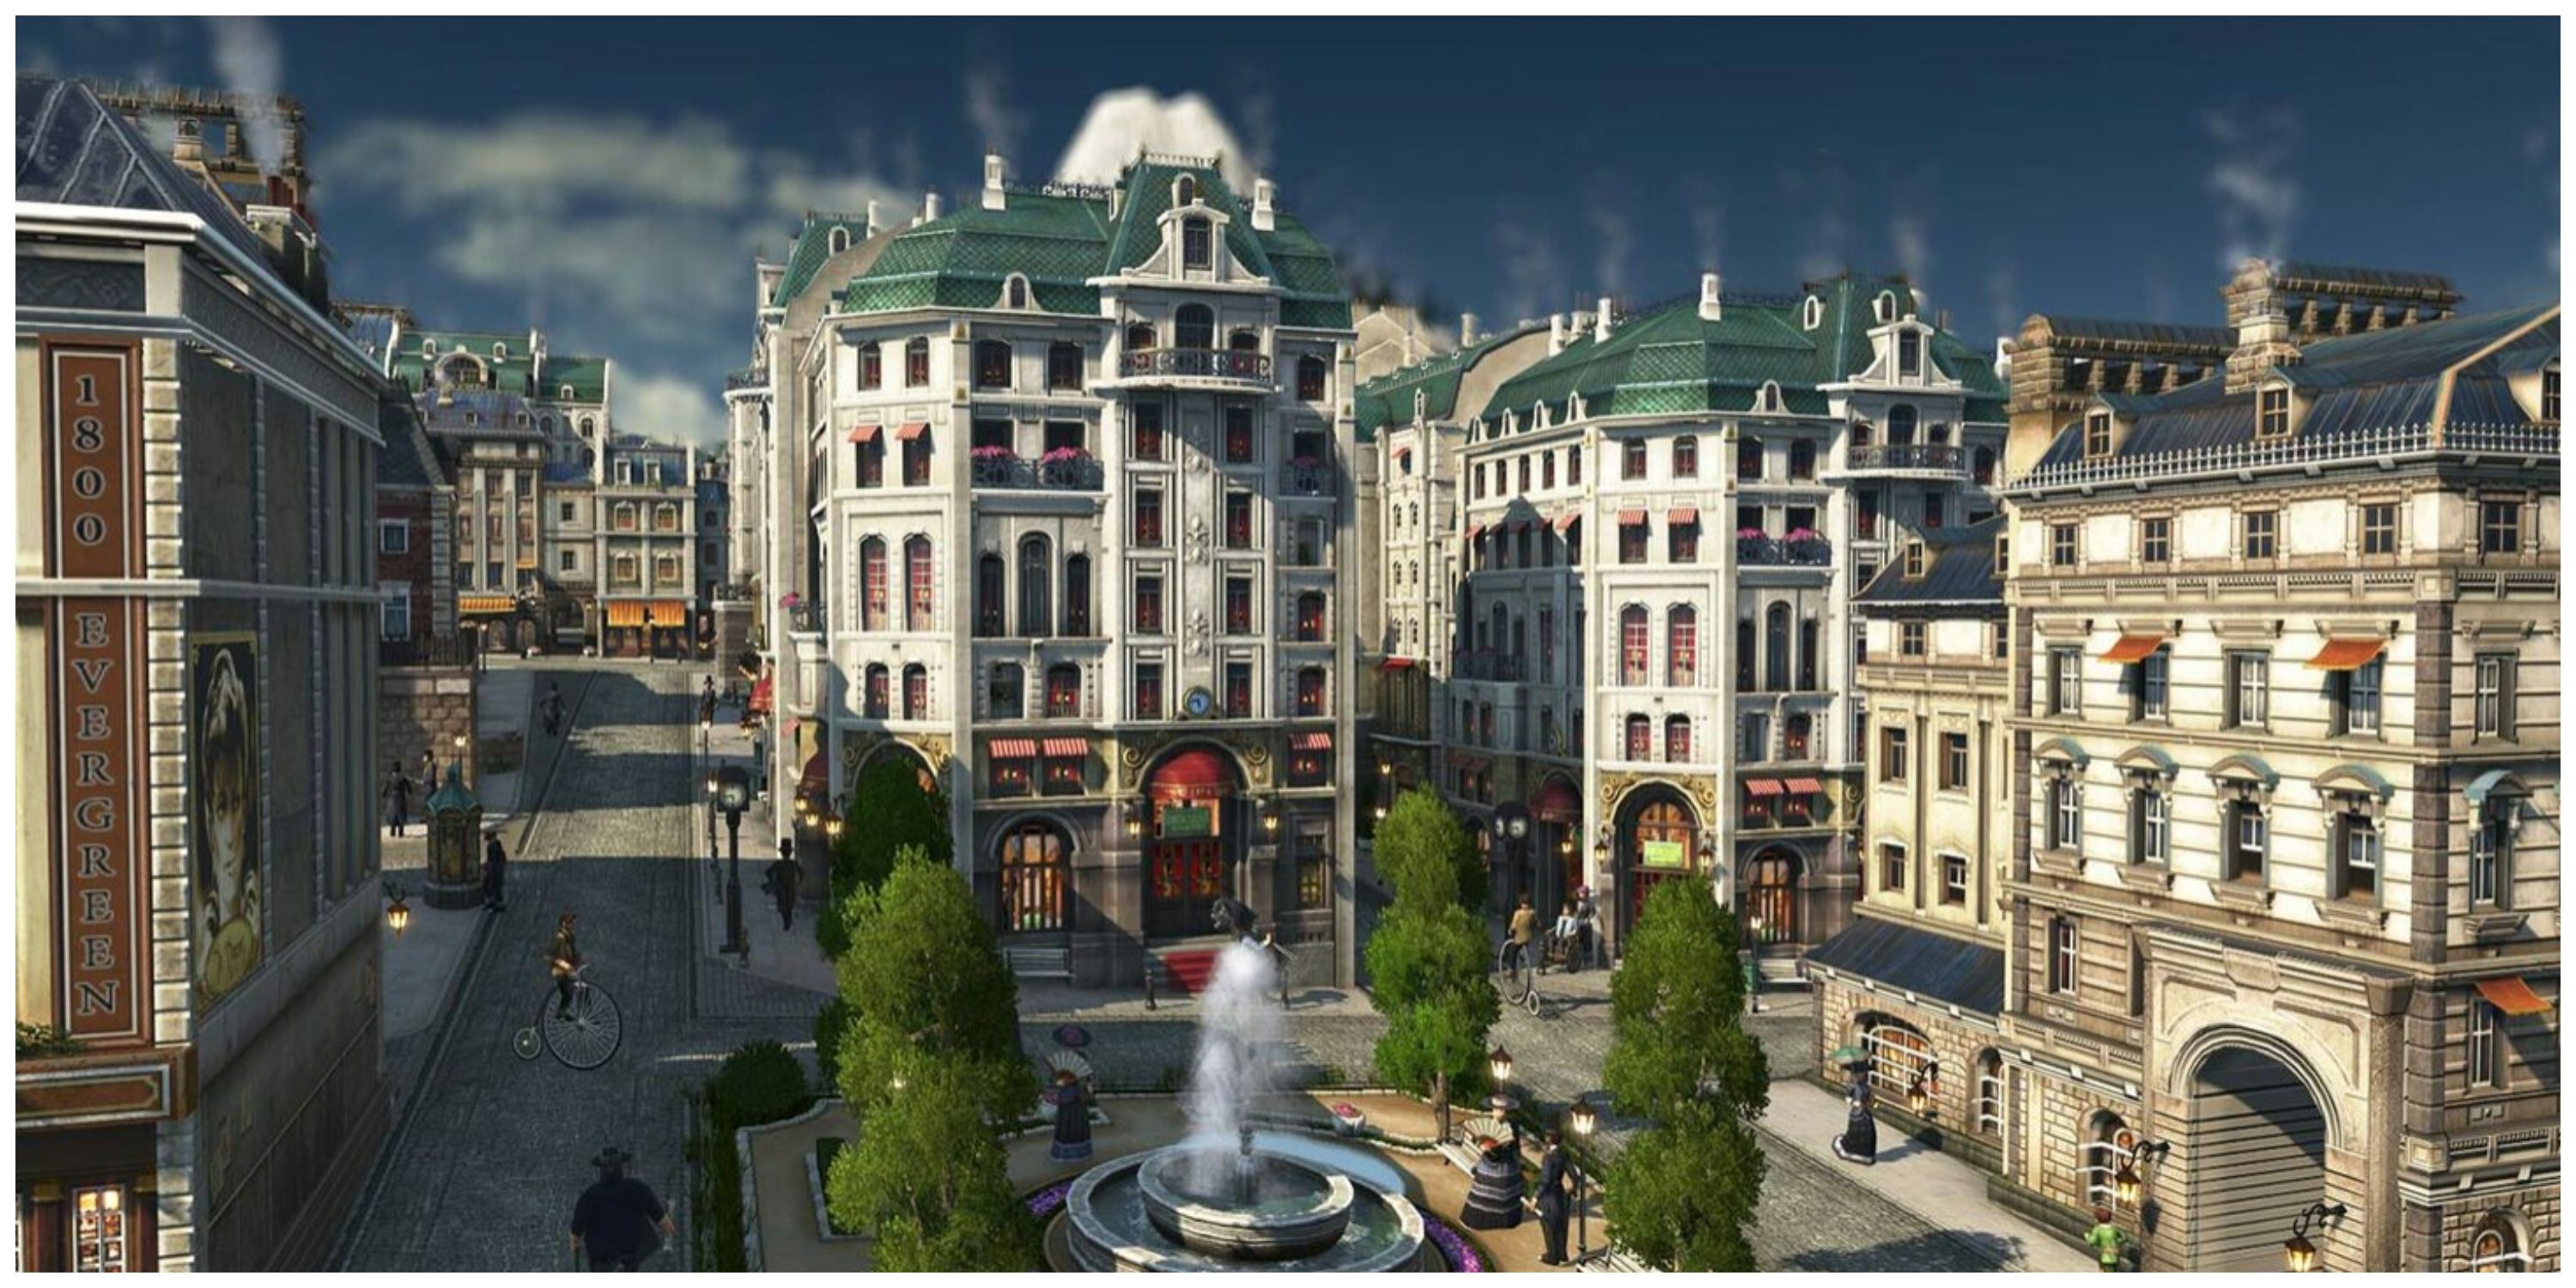 Anno 1800 - Steam Store Page Screenshot (City Square)